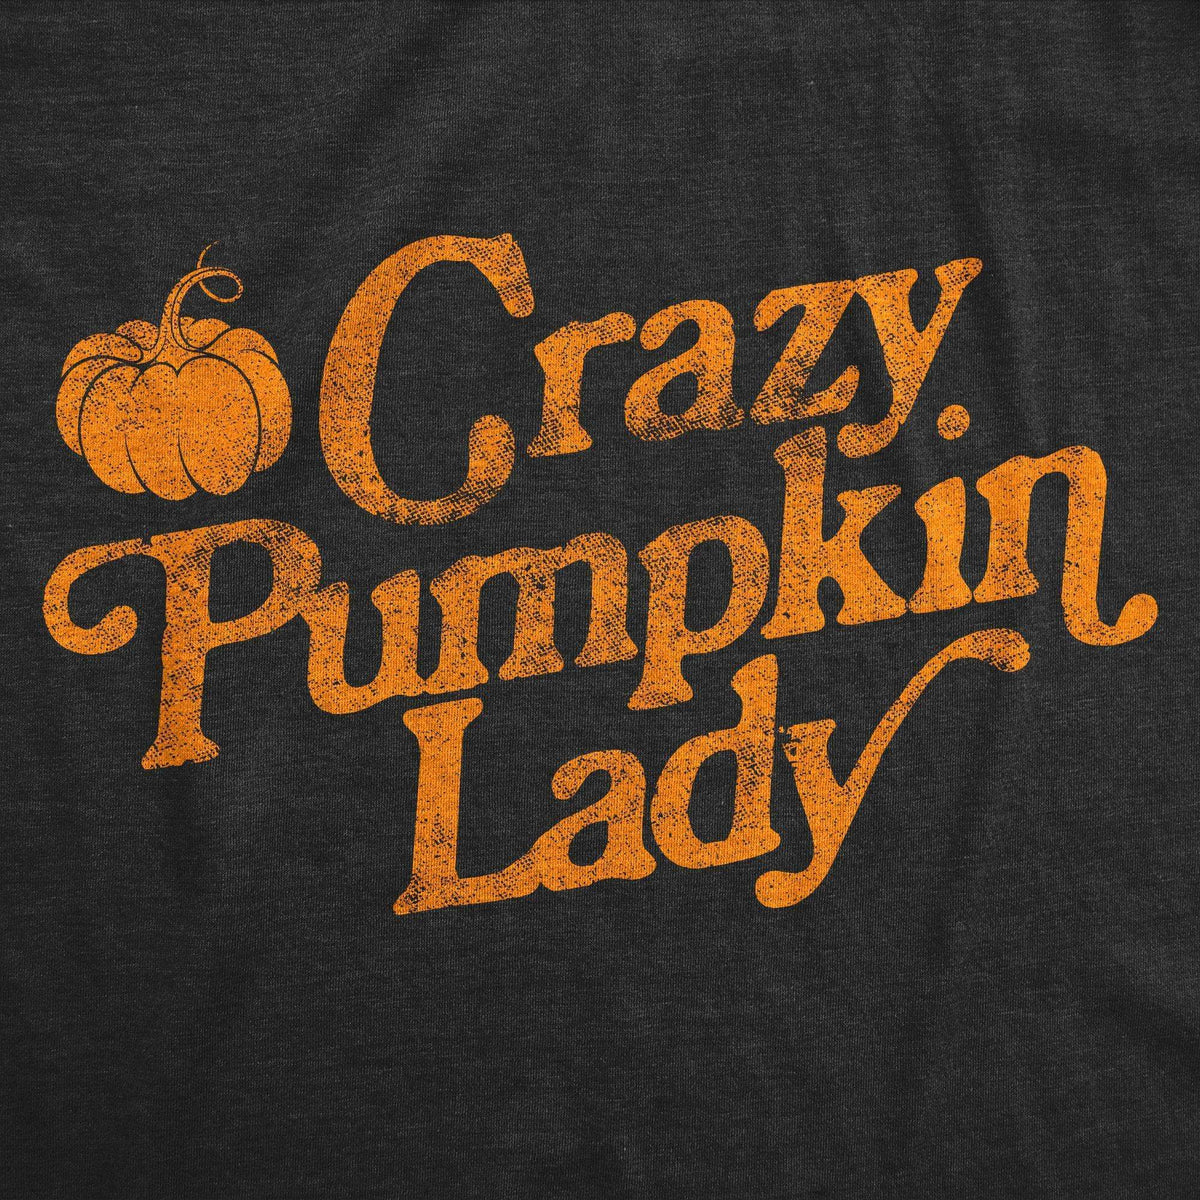 Crazy Pumpkin Lady Women&#39;s Tshirt - Crazy Dog T-Shirts